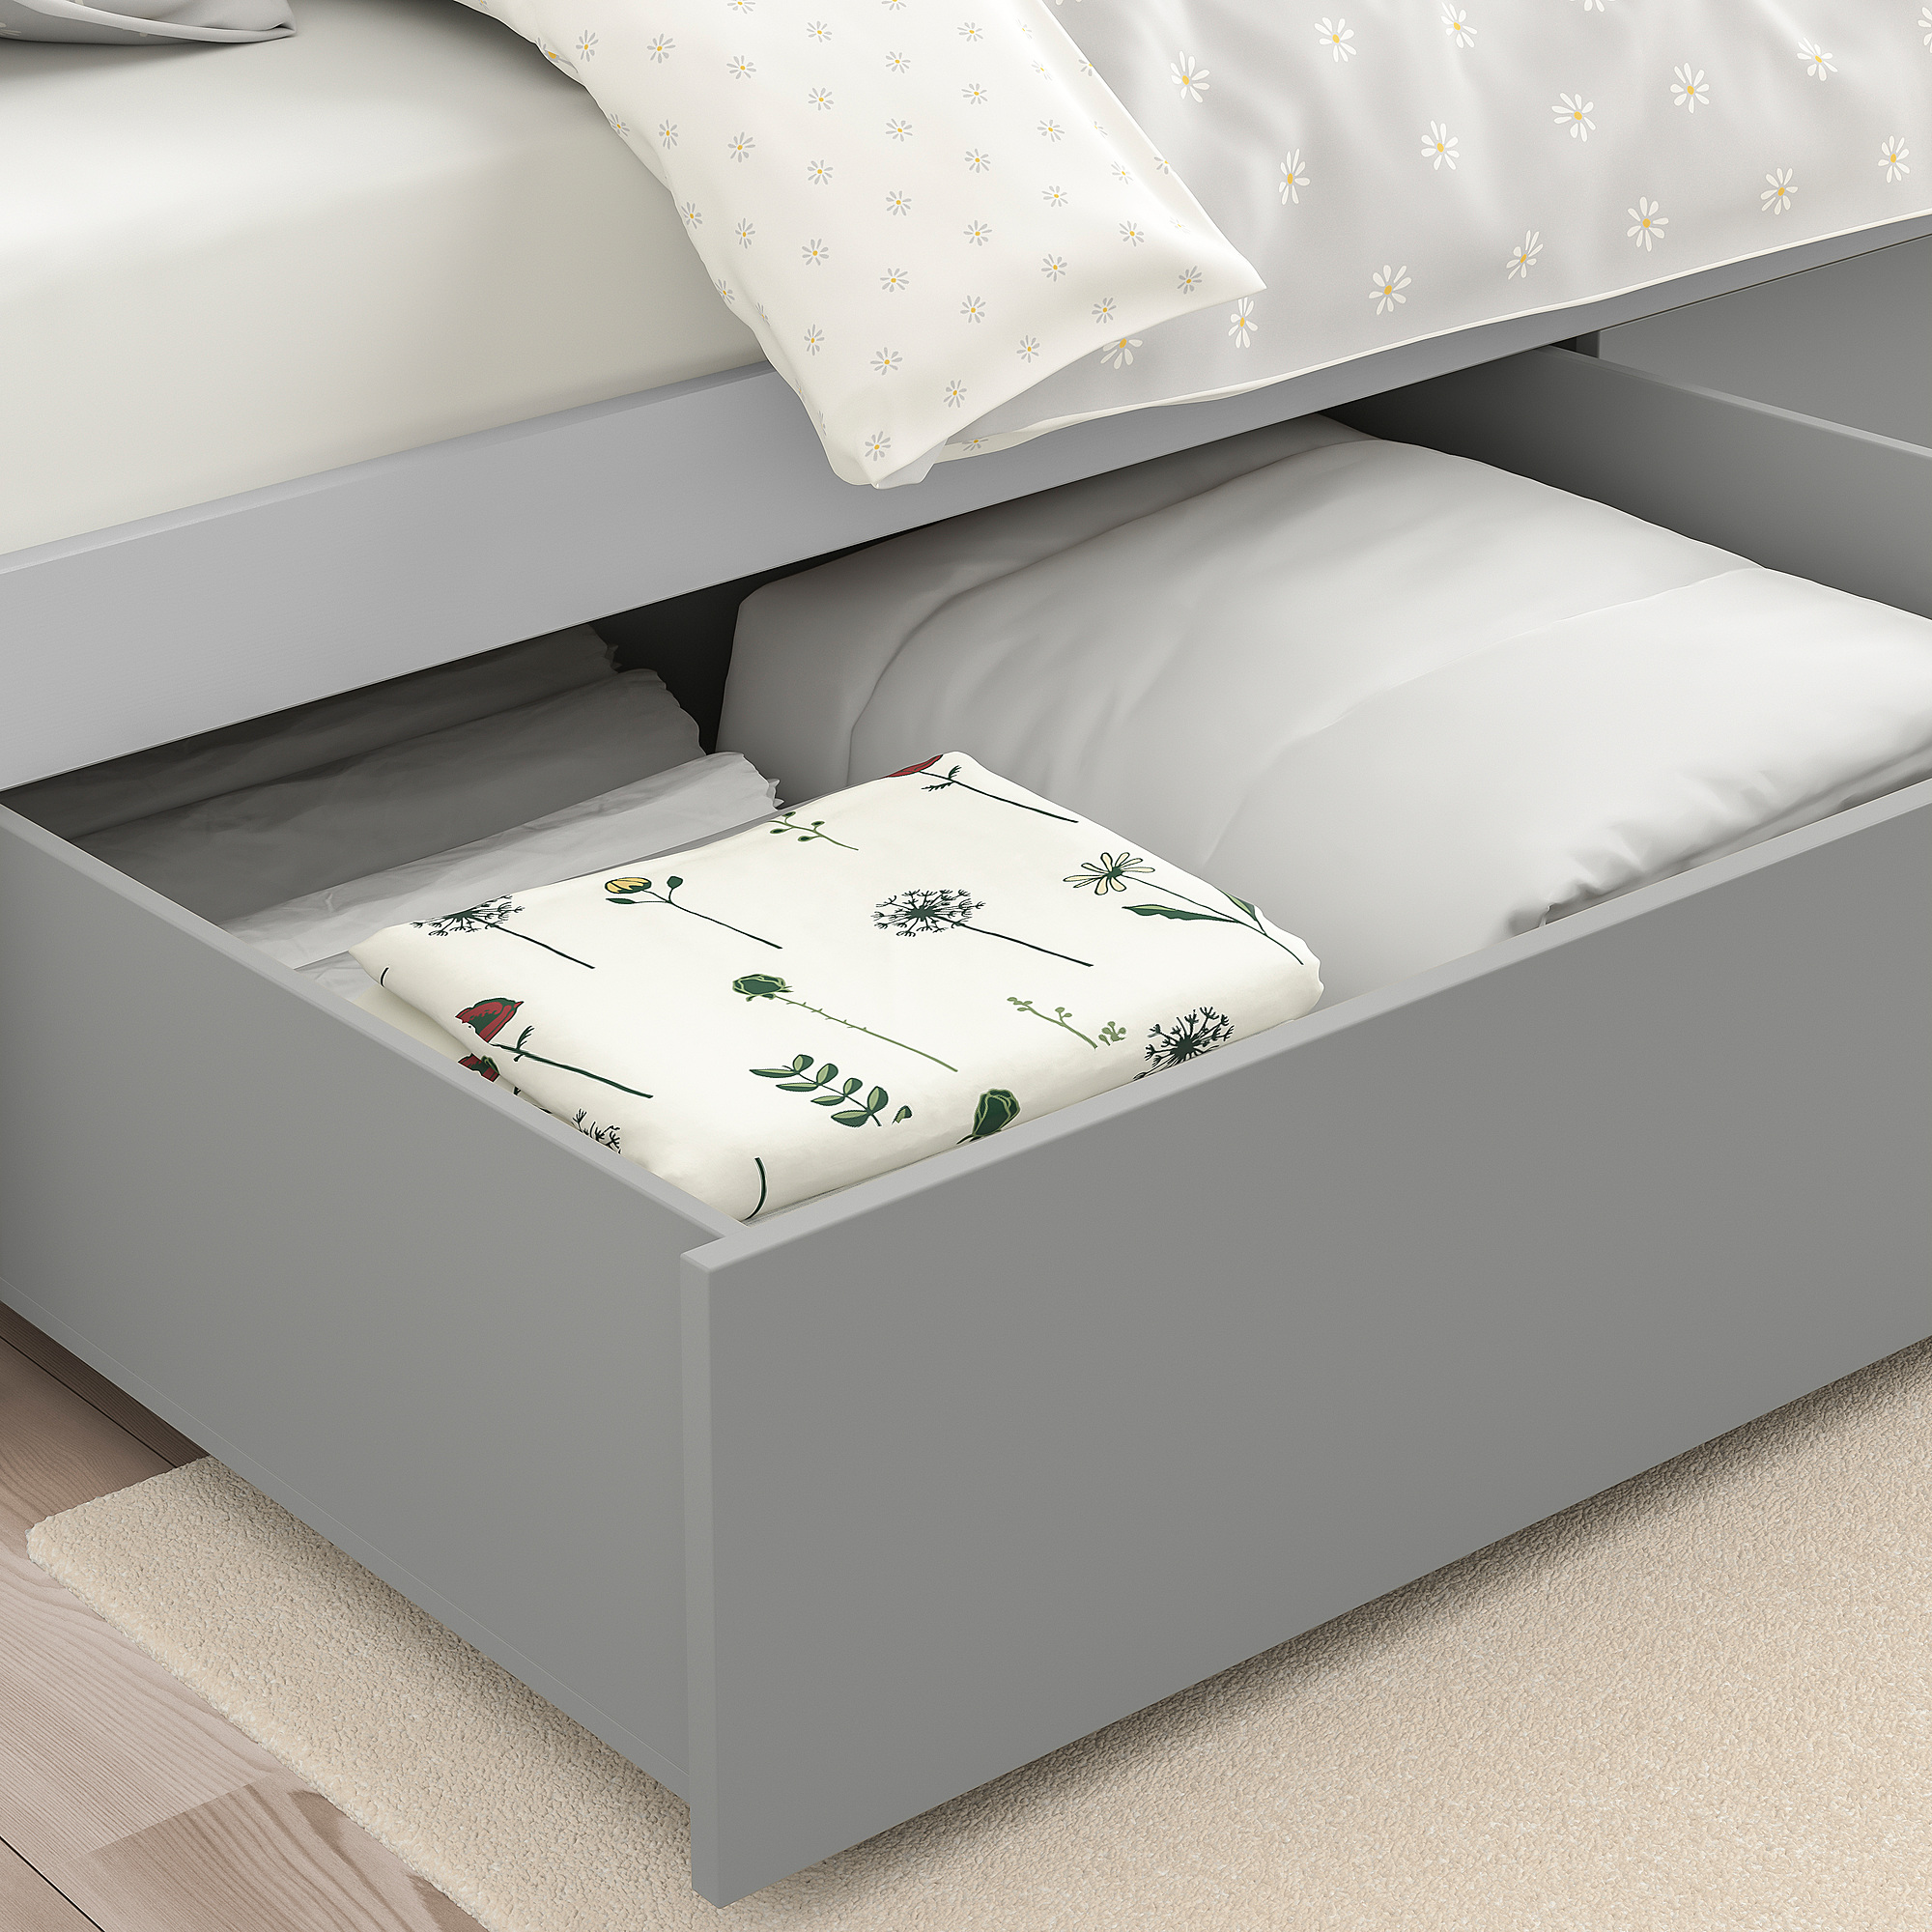 SMYGA bed frame with storage